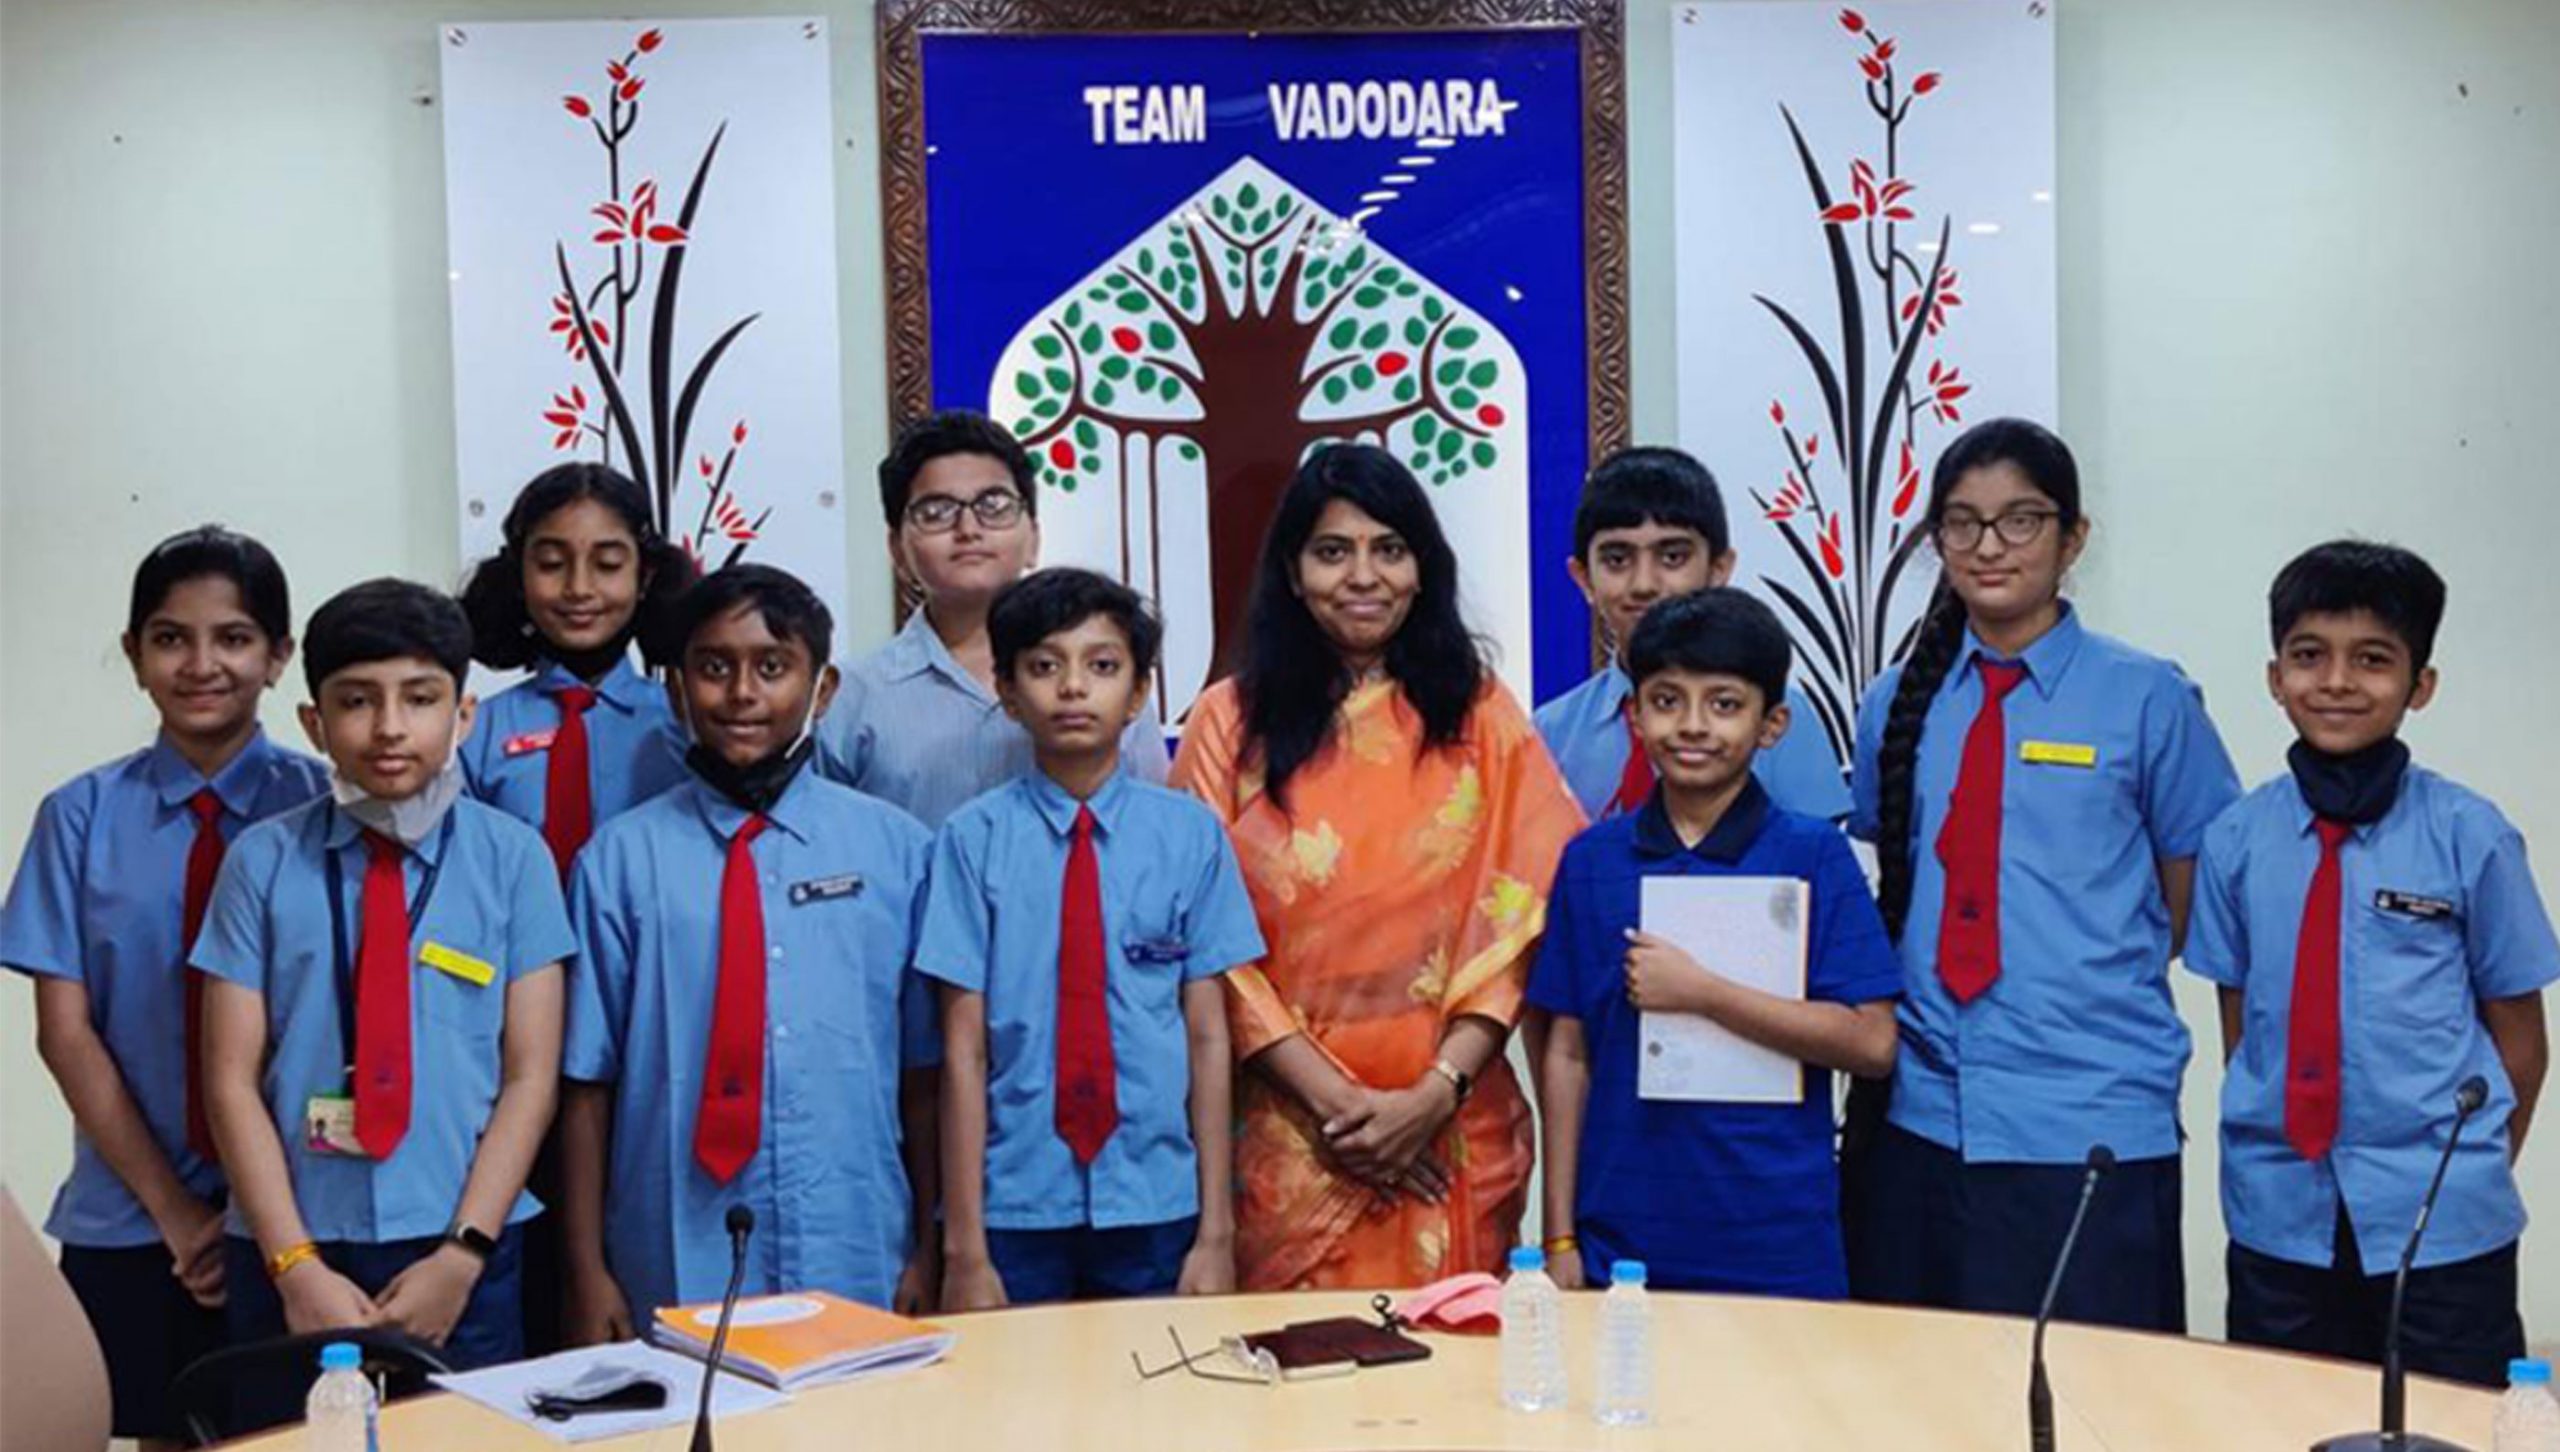 Navrachana Sama - The students of Navrachana School, Sama